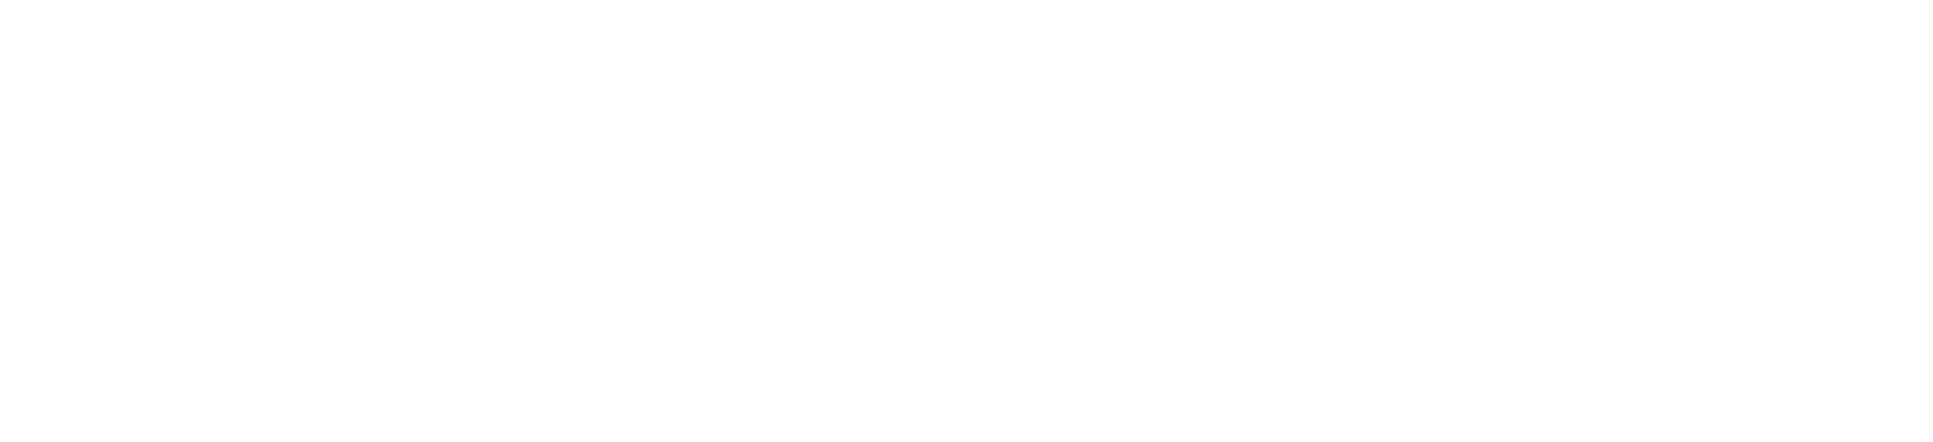 Ramco Litigation Funding